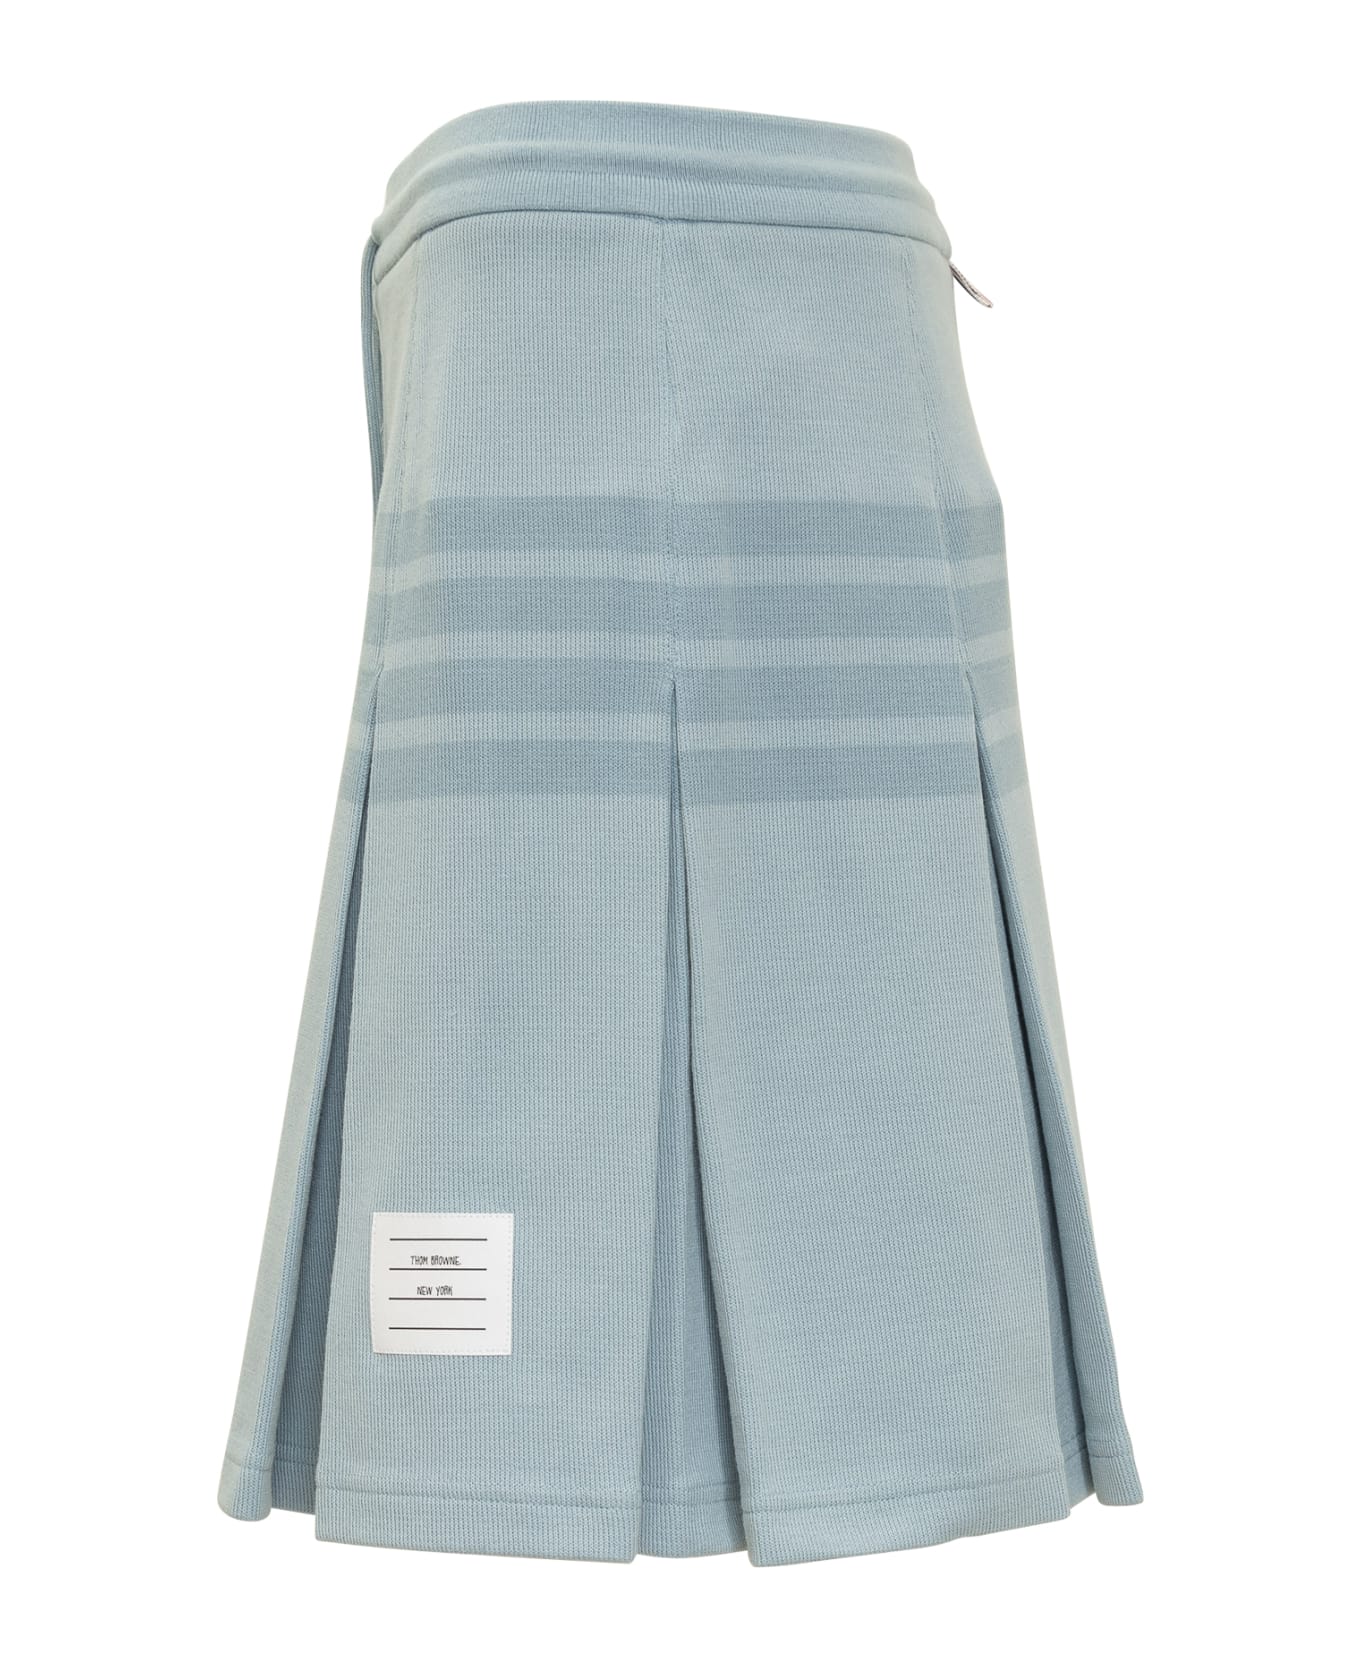 Thom Browne 4-bar Pleated Cotton Skirt - Light Blue